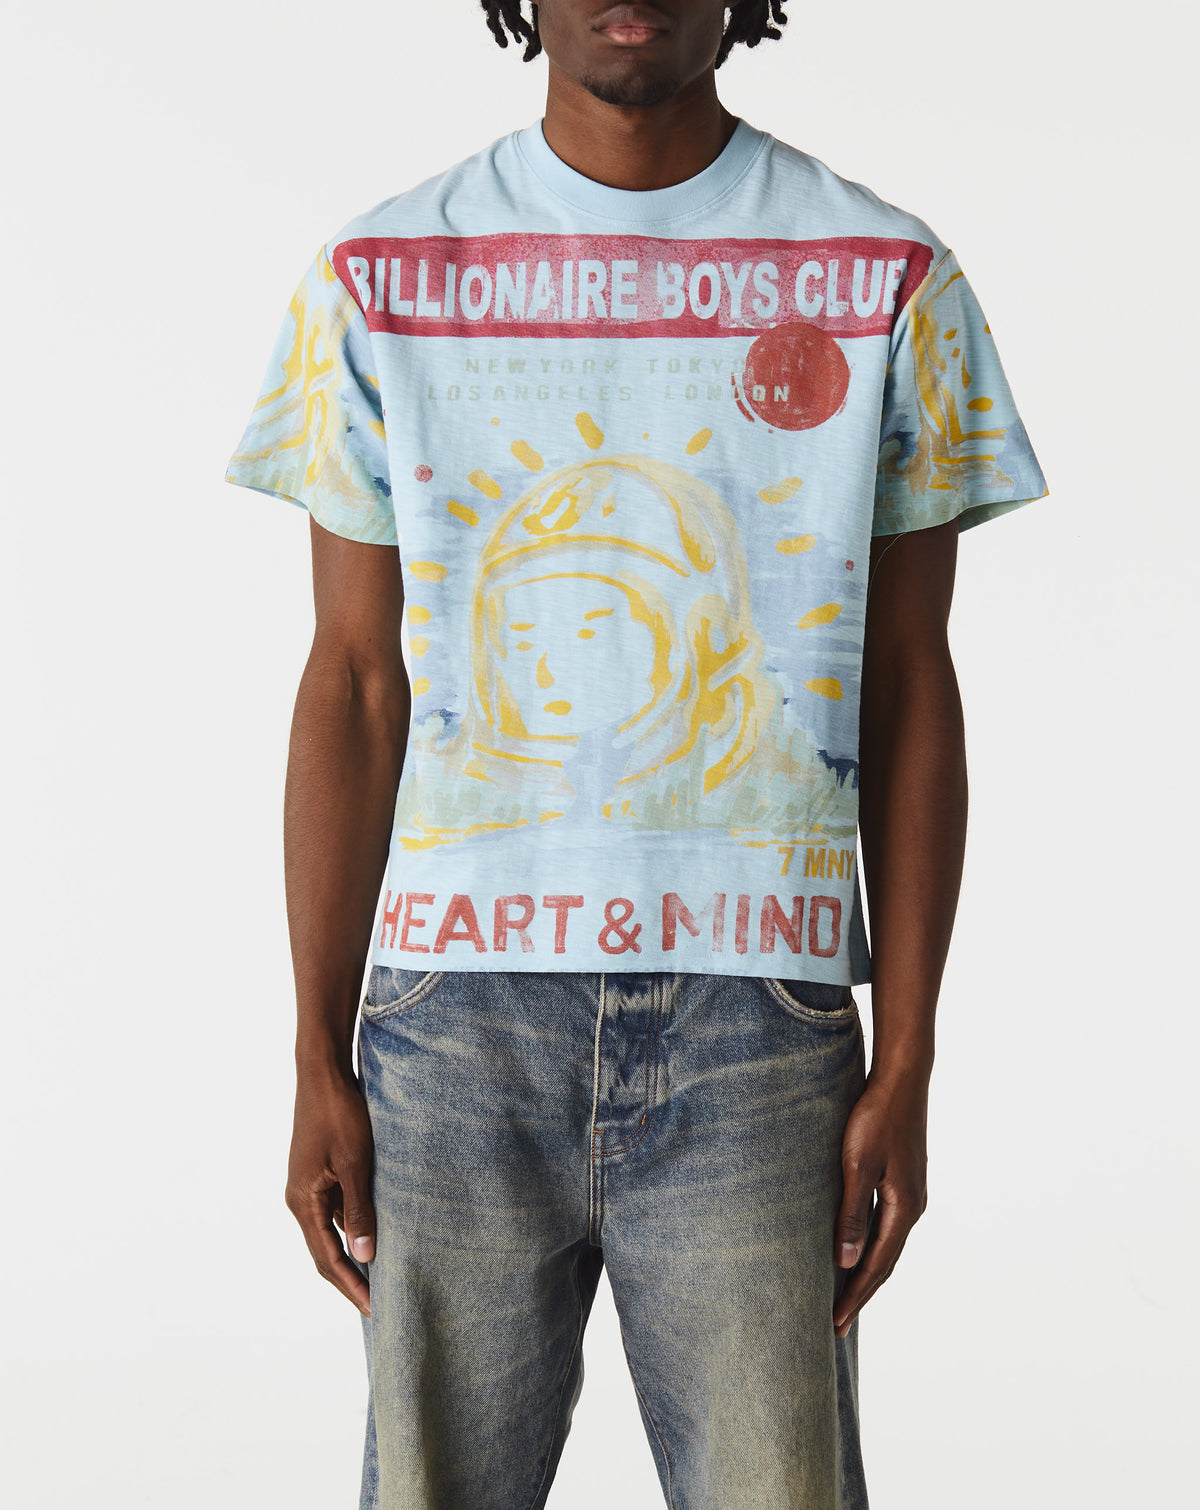 Billionaire Boys Club BB Wonder T-Shirt (Cropped Fit) - Rule of Next Apparel